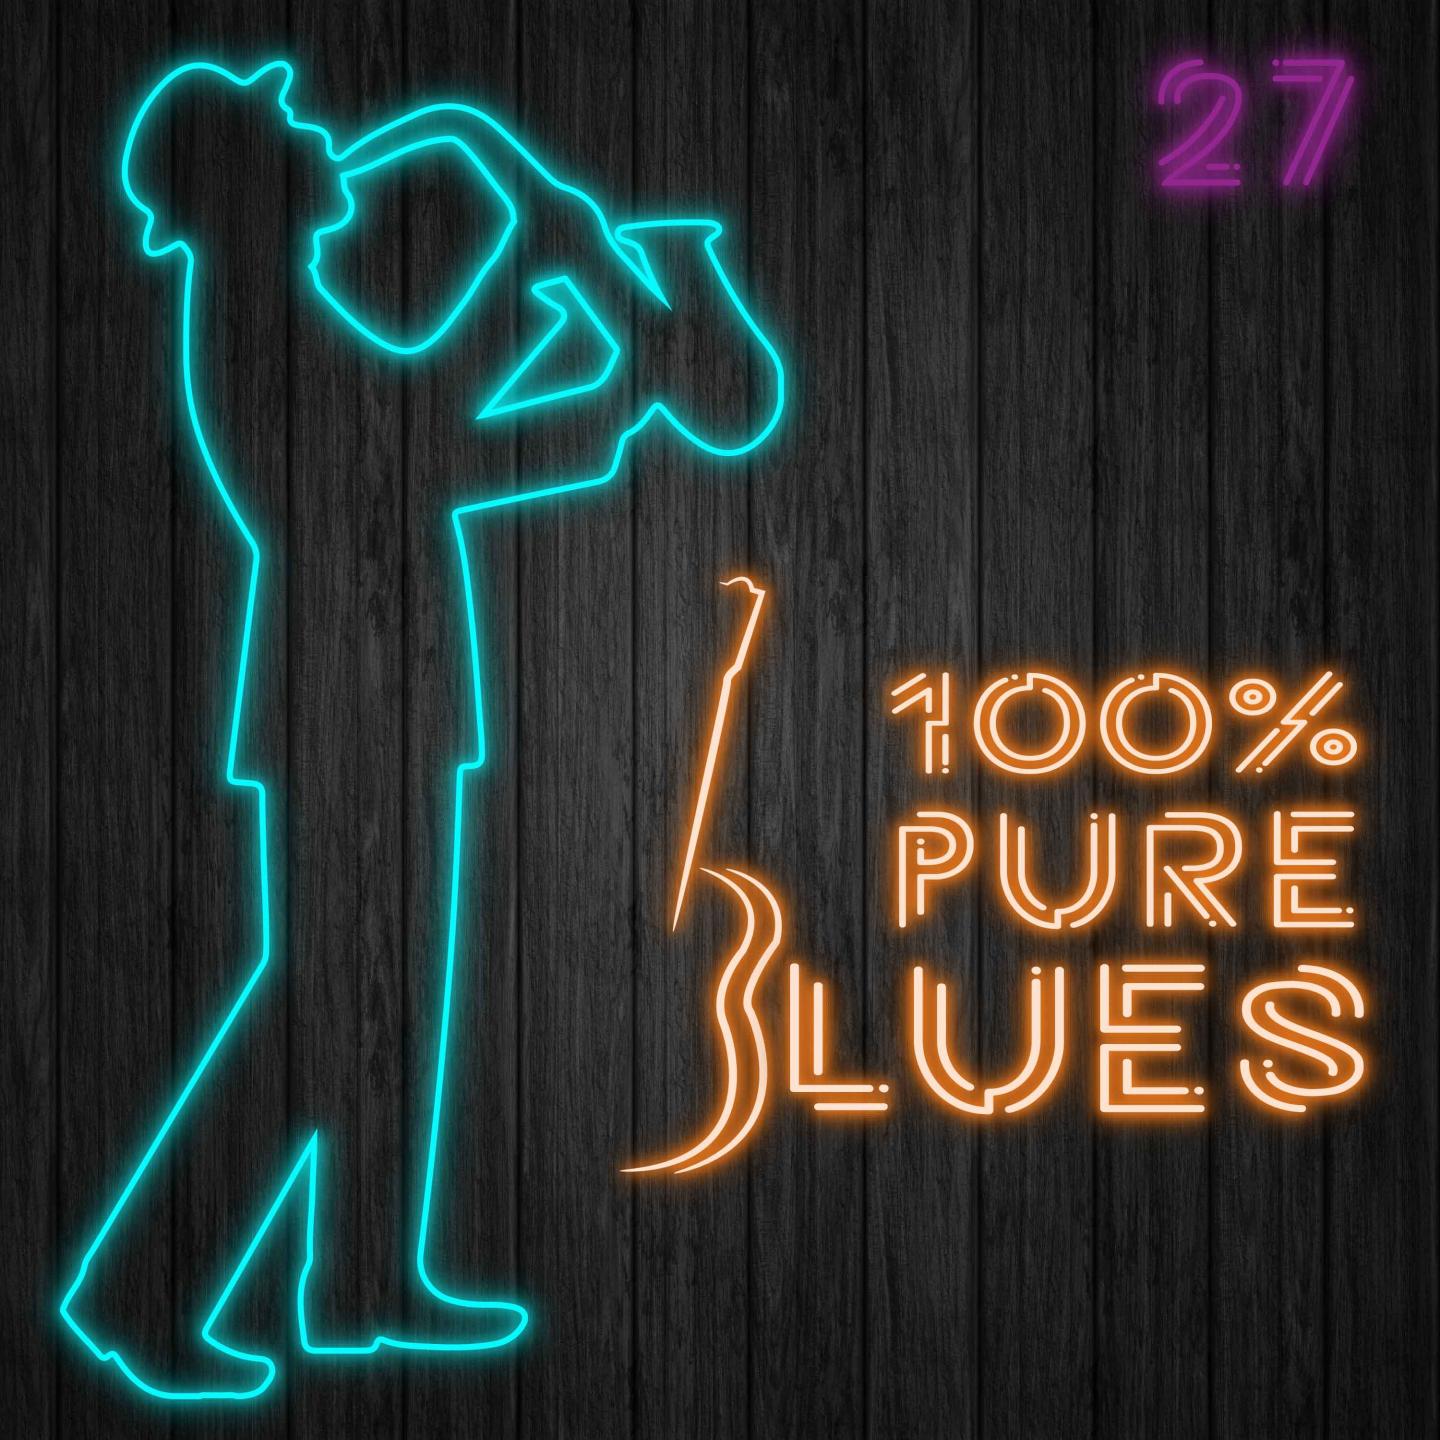 100% Pure Blues / 27